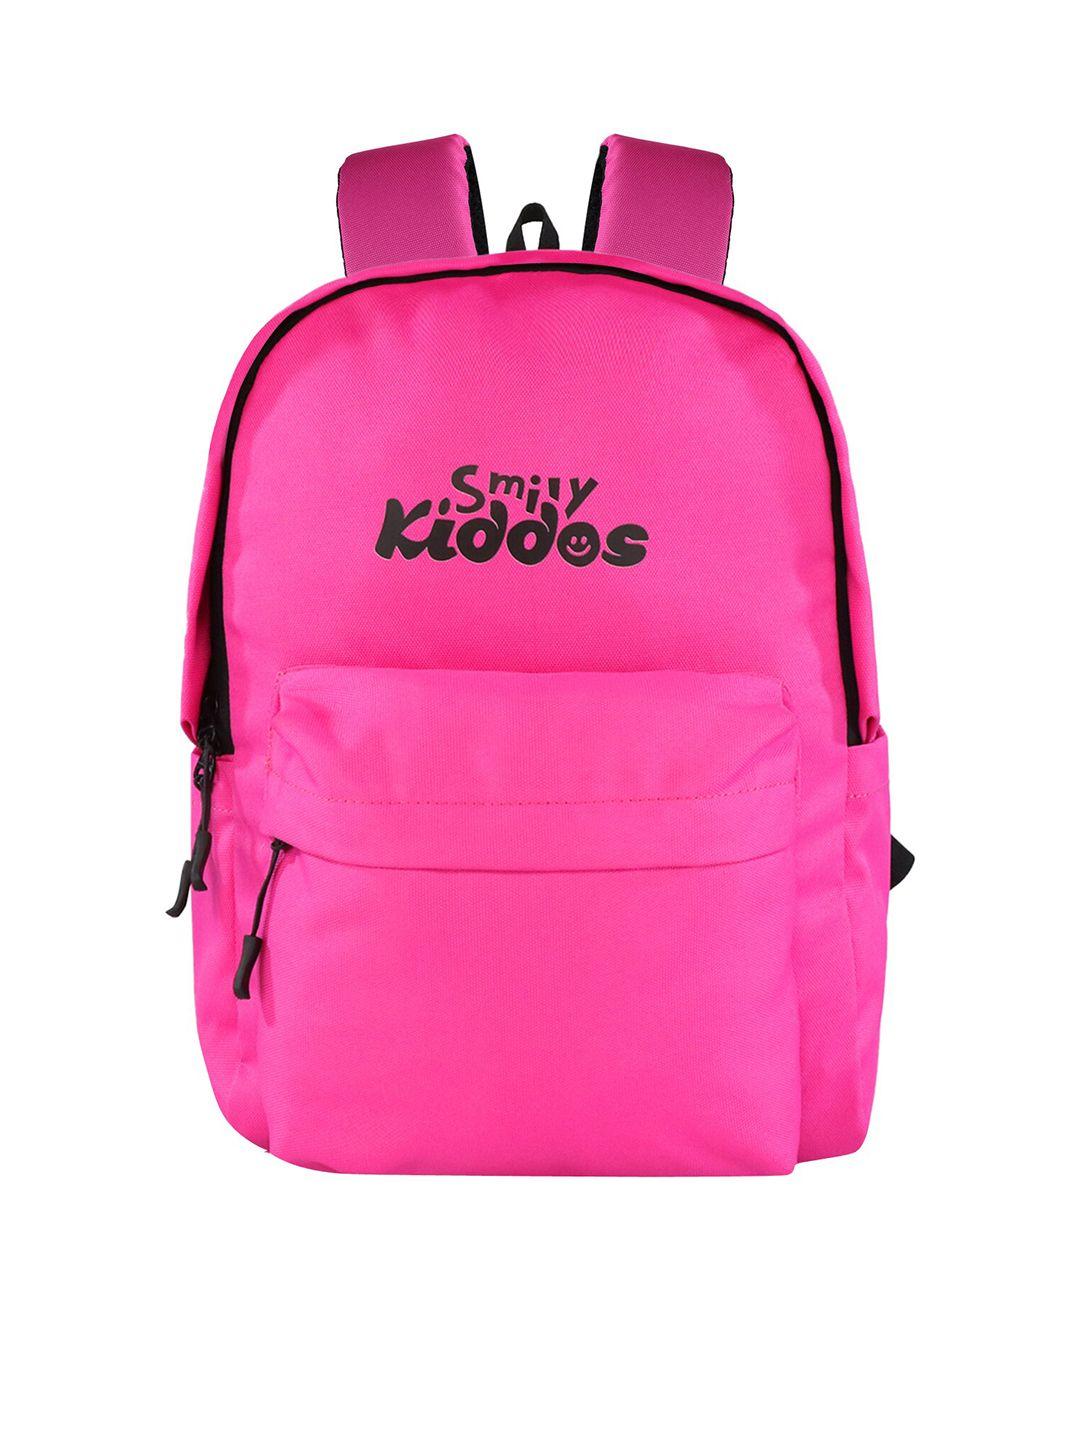 smily kiddos brand logo printed backpack